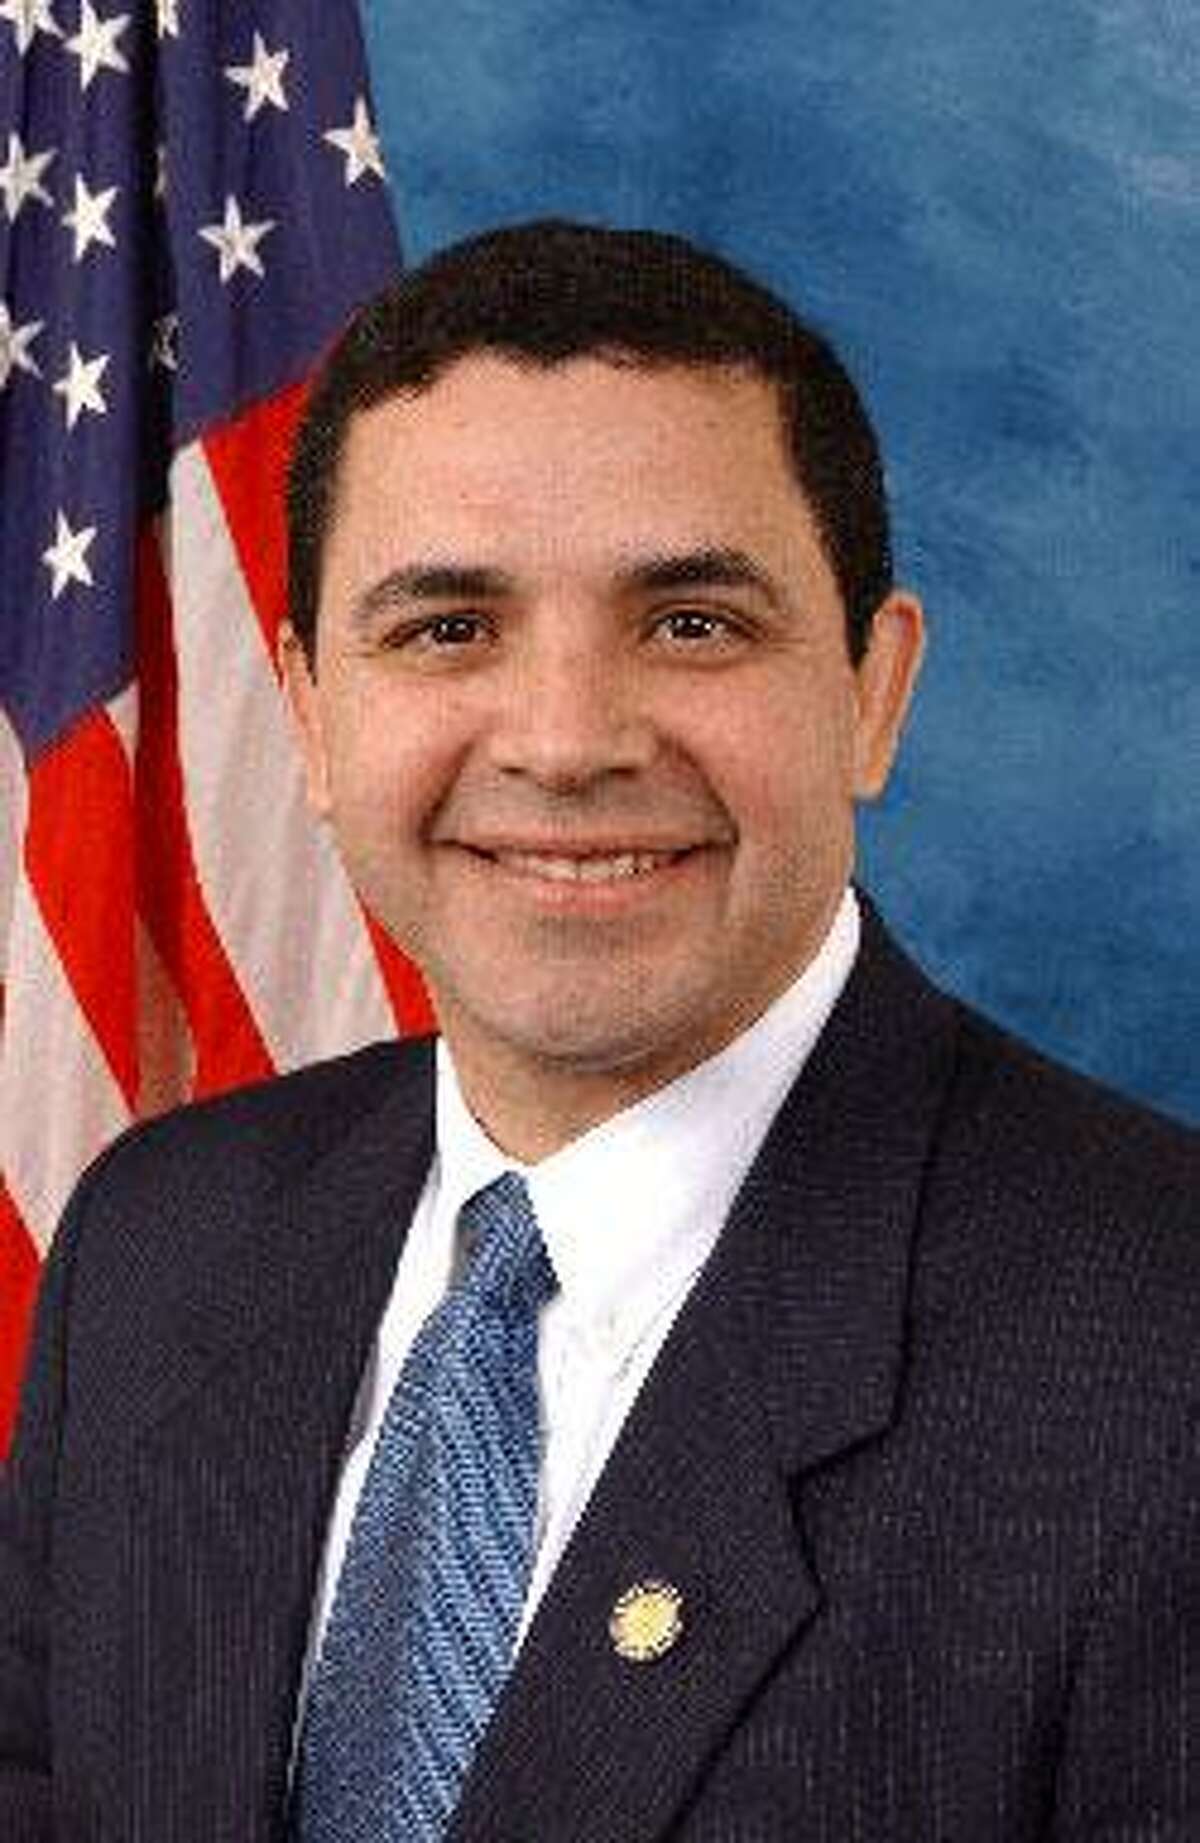 U.S. Congressman Henry Cuellar is seen in an undated photo taken Saturday Jan. 19, 2013 from the congressman's official website.